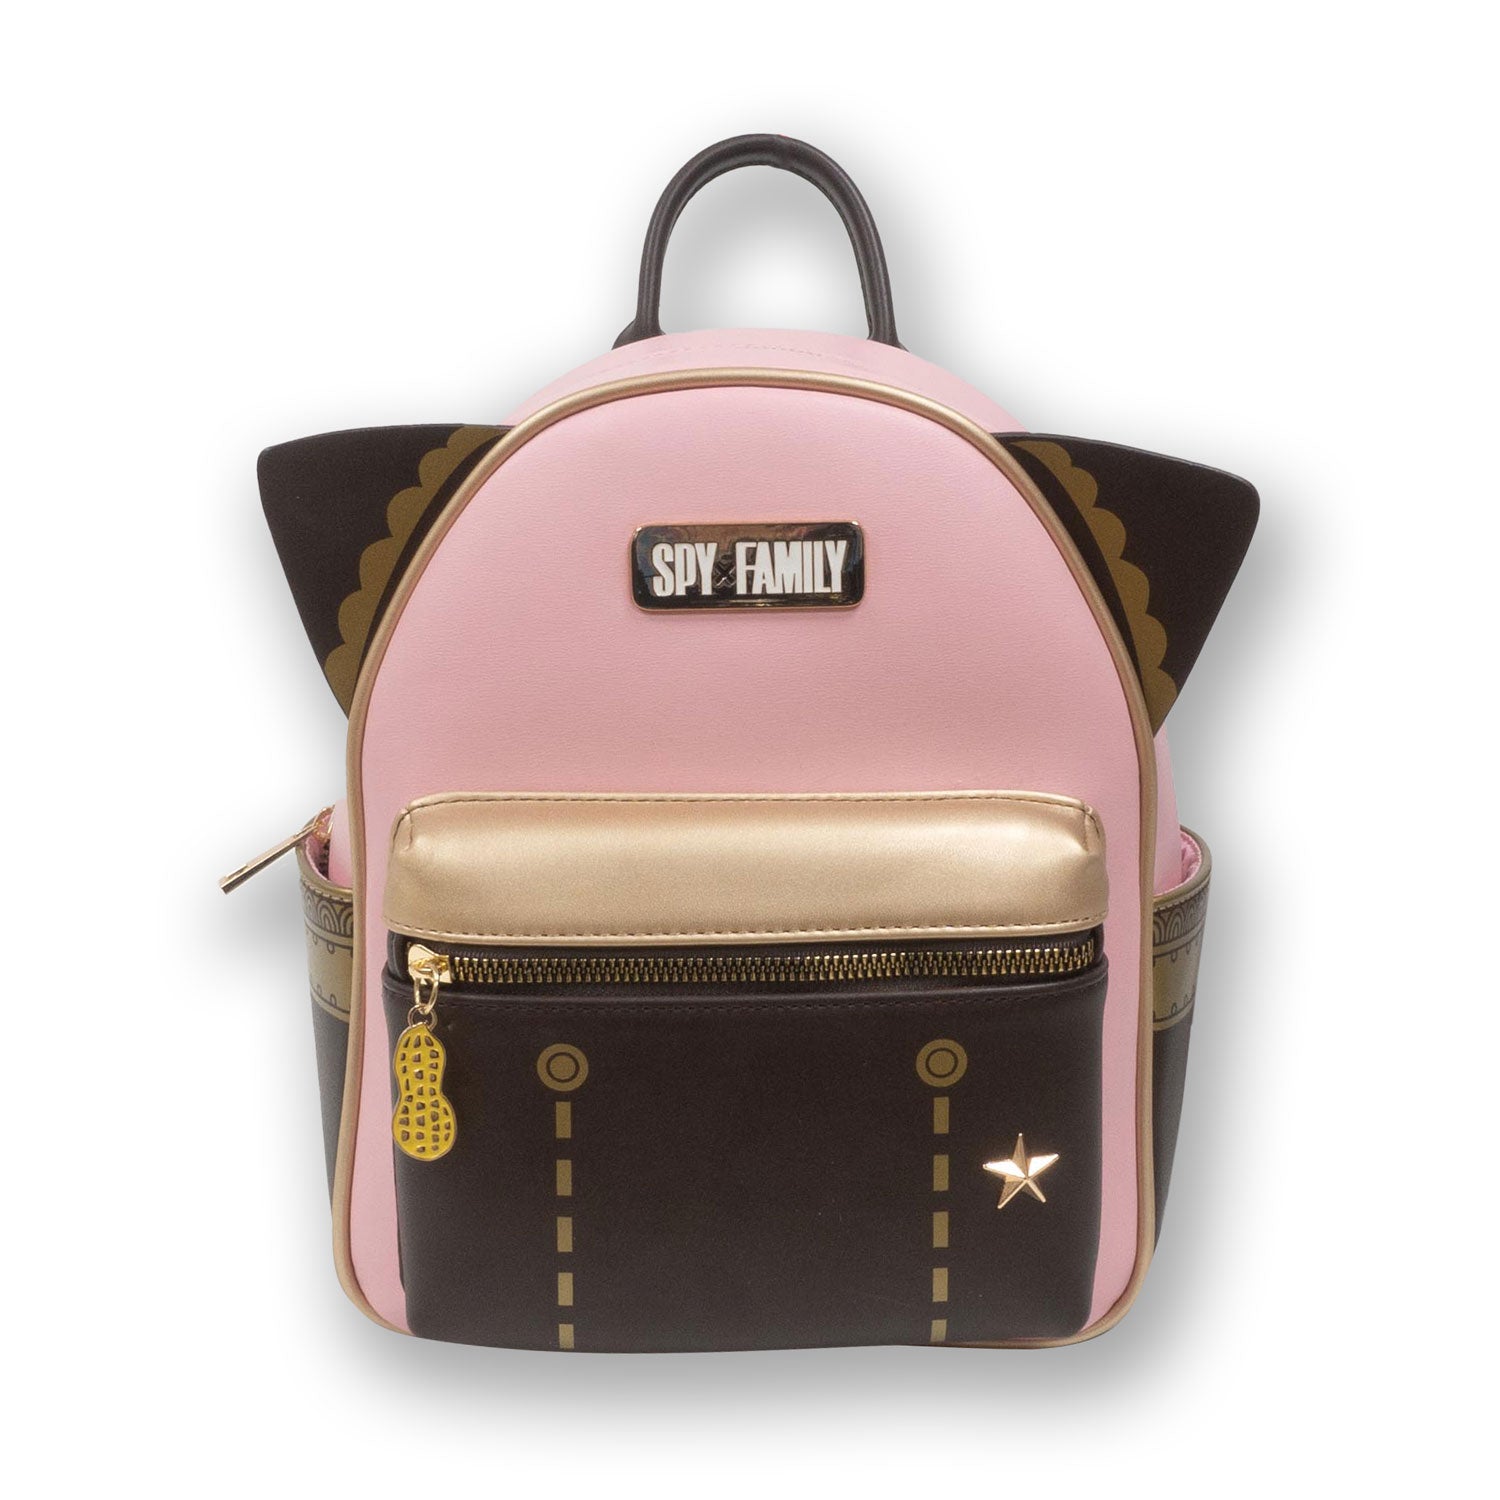 Spy x Family Anya Pink PU Mini Backpack with Horns